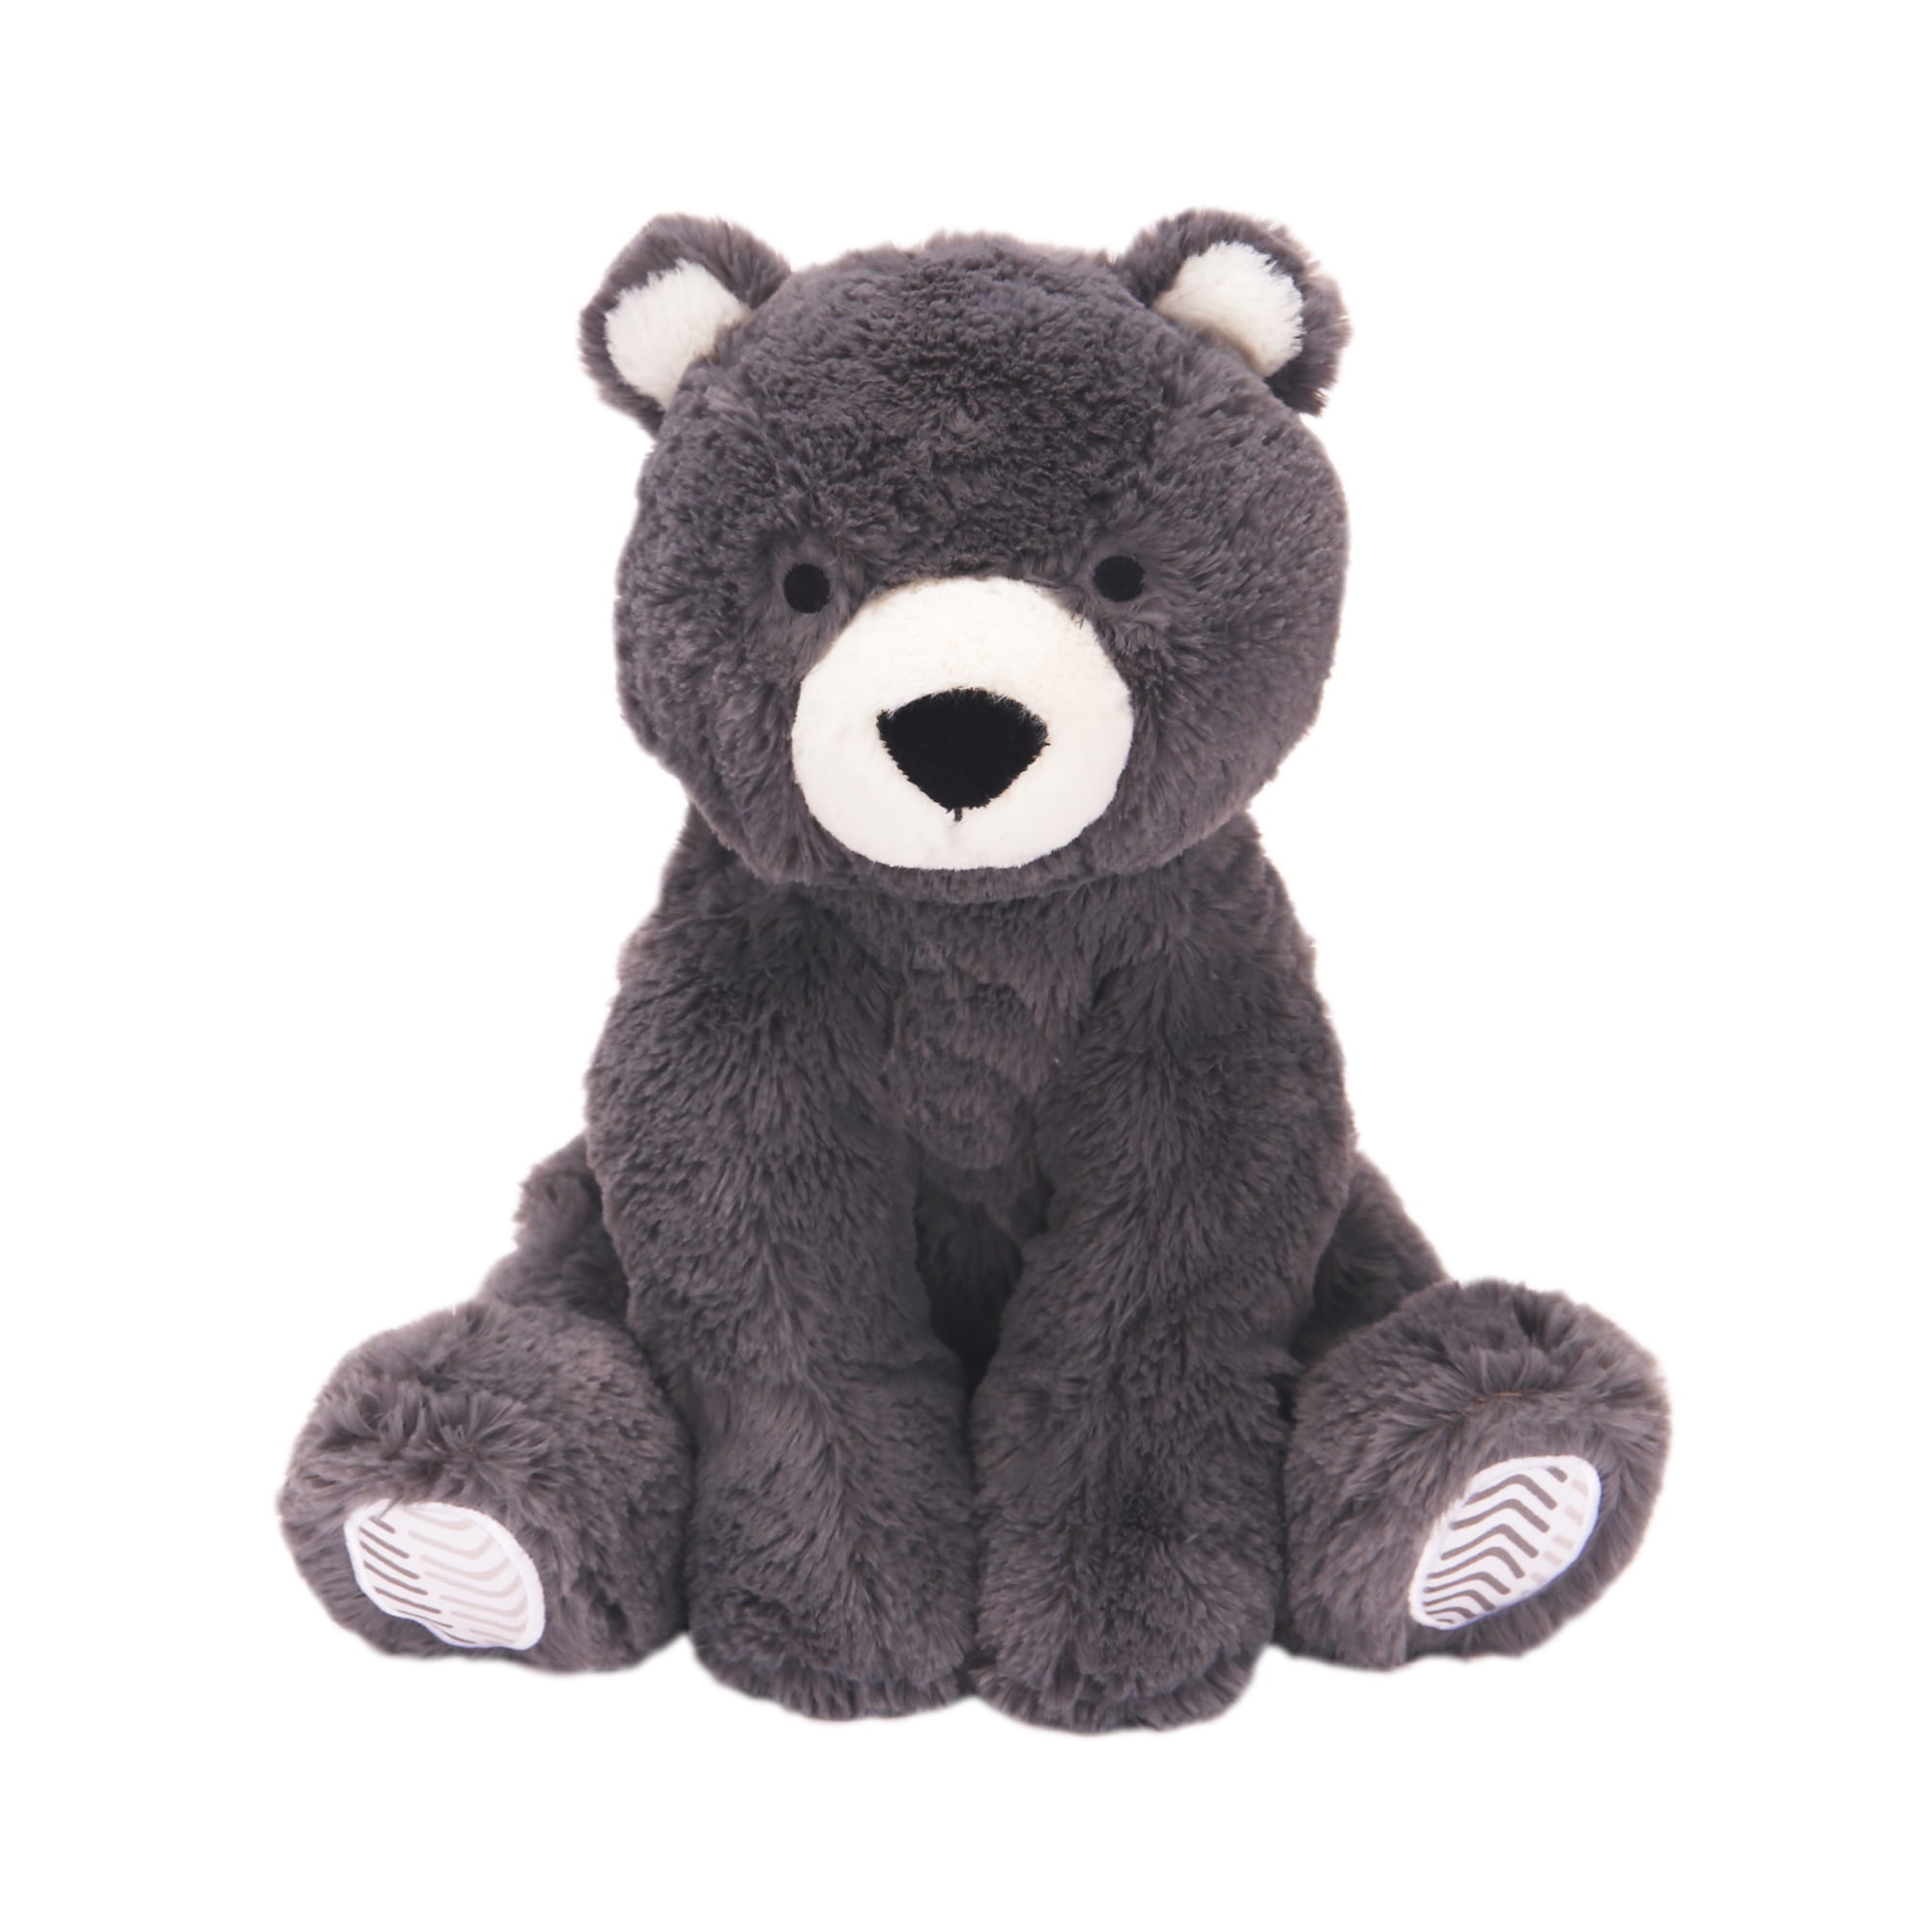 Details about   Paws boys Soft Cuddly Bear Toy Gift Kids stuffed toy 32 cm boy bear cuddly 